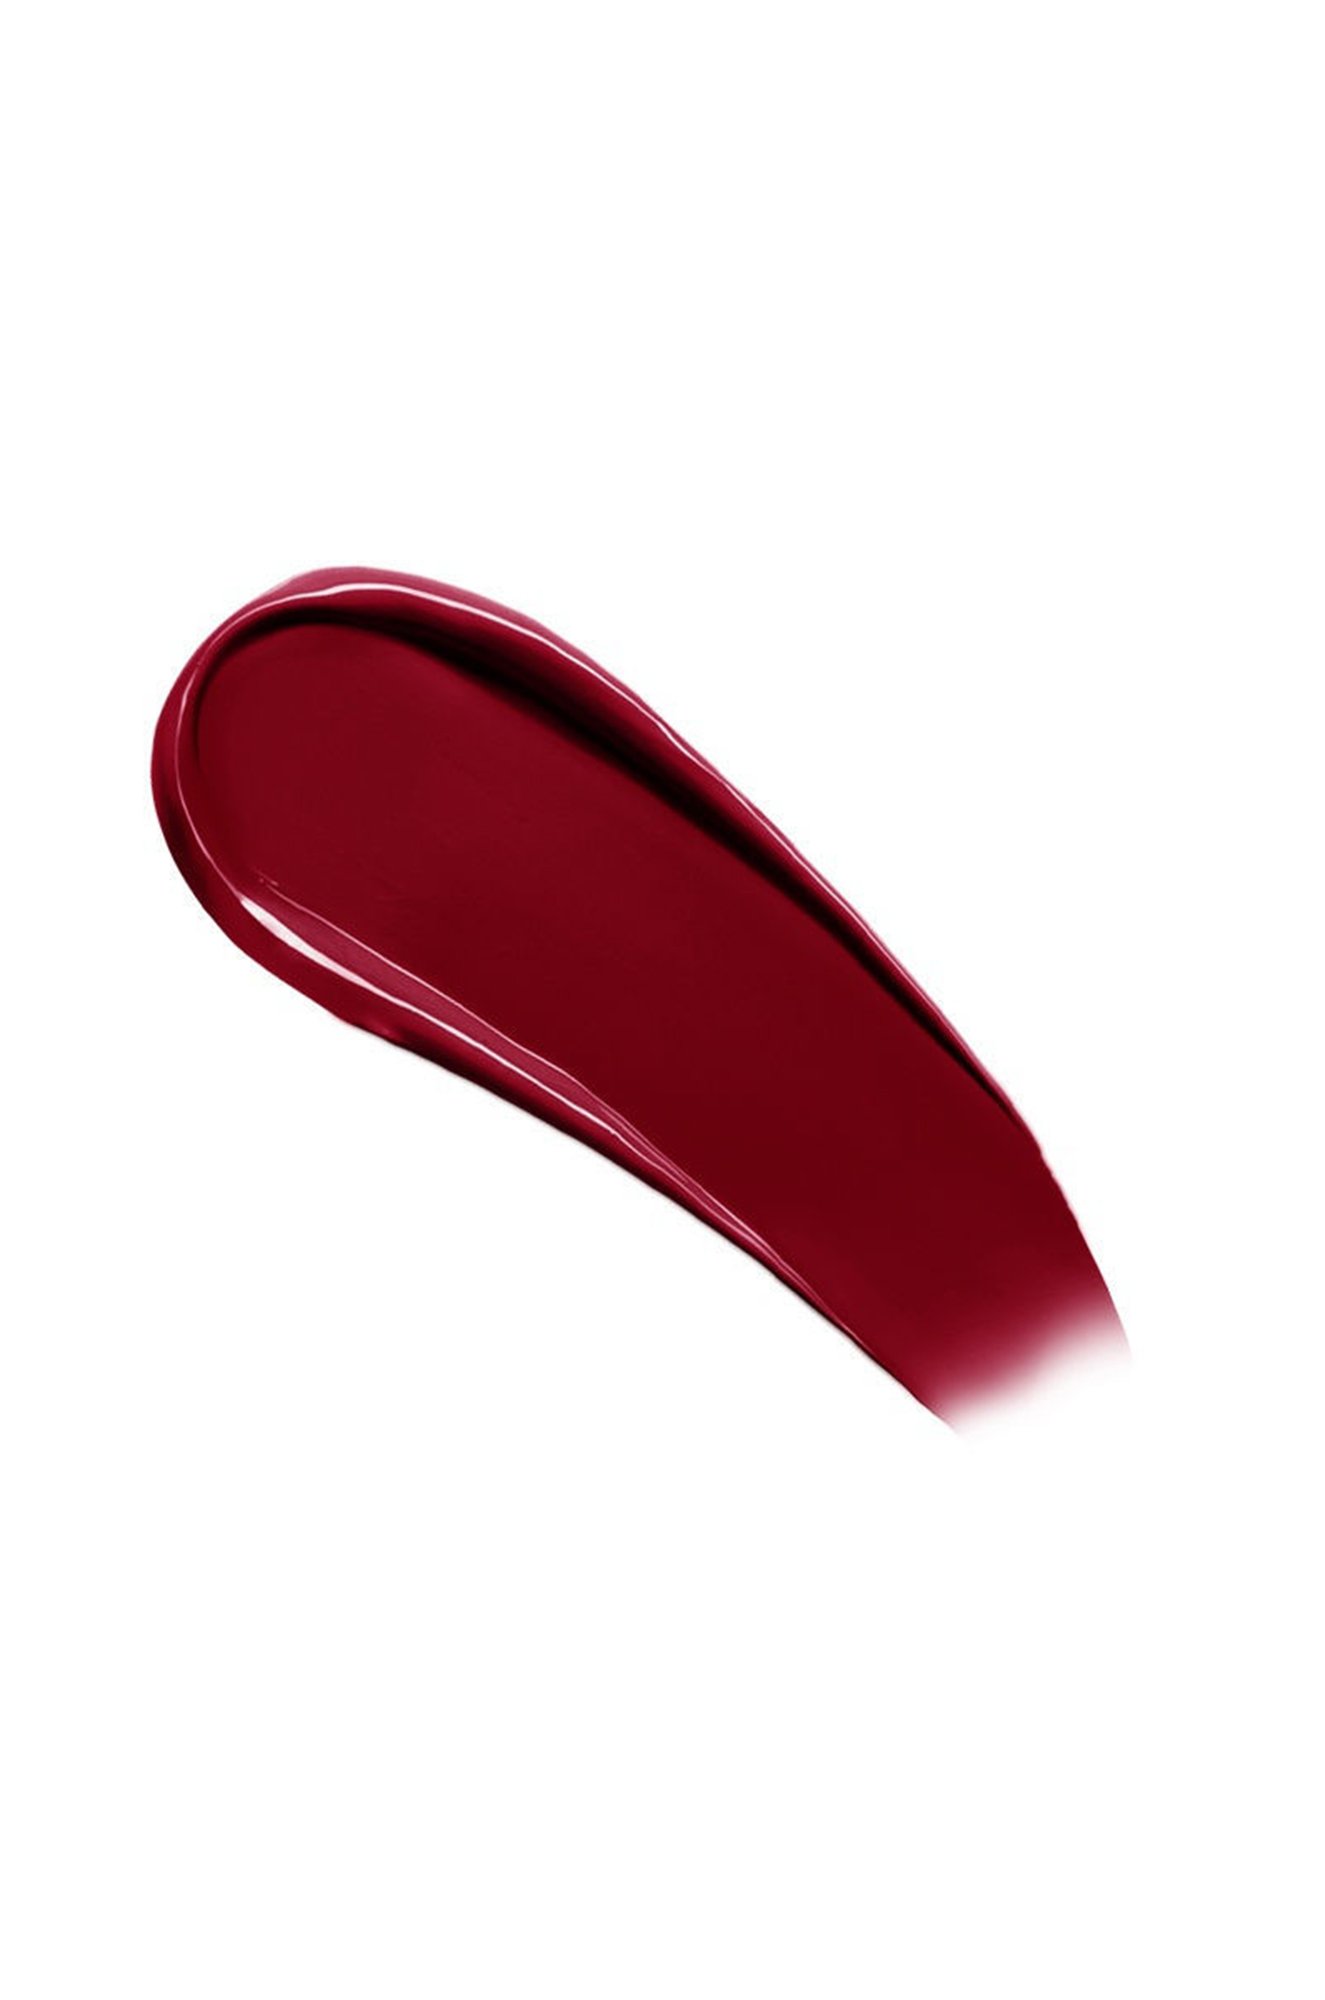 Помада-блеск для губ Liquid Lipstick Beauty Killer т.05 5 мл DIVAGE